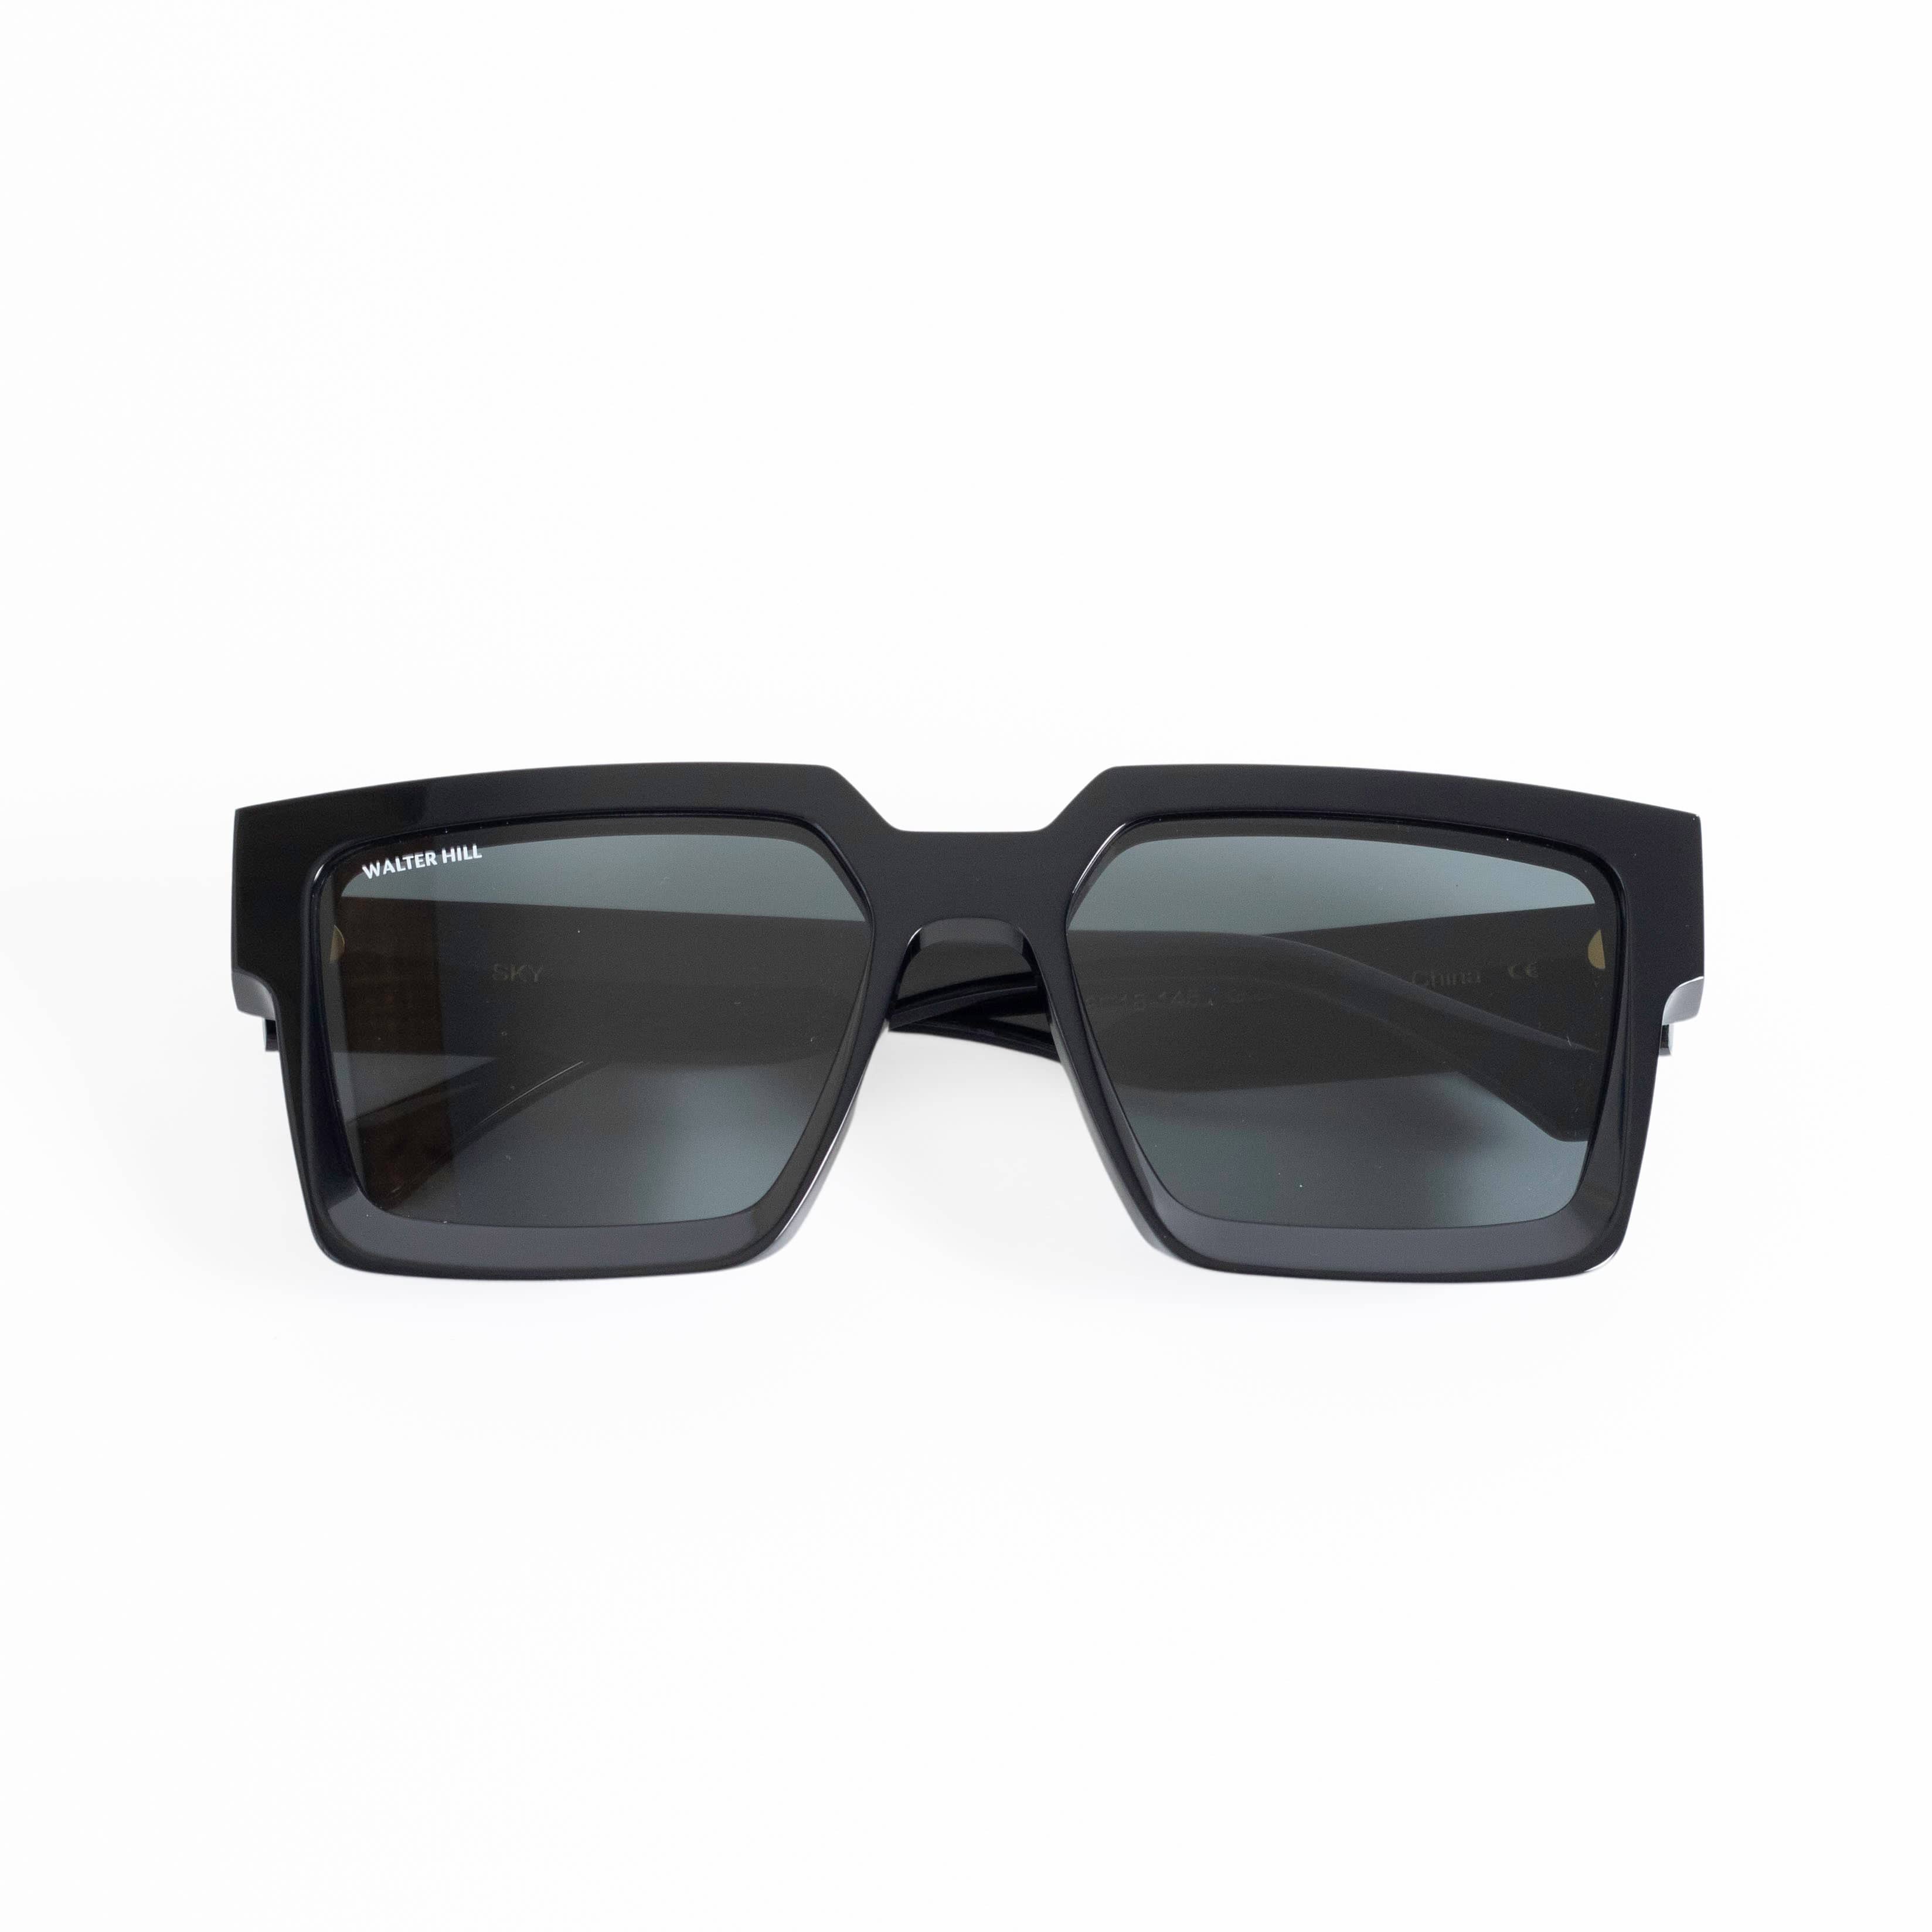 Walter Hill Sunglasses Oversized SKY - Black